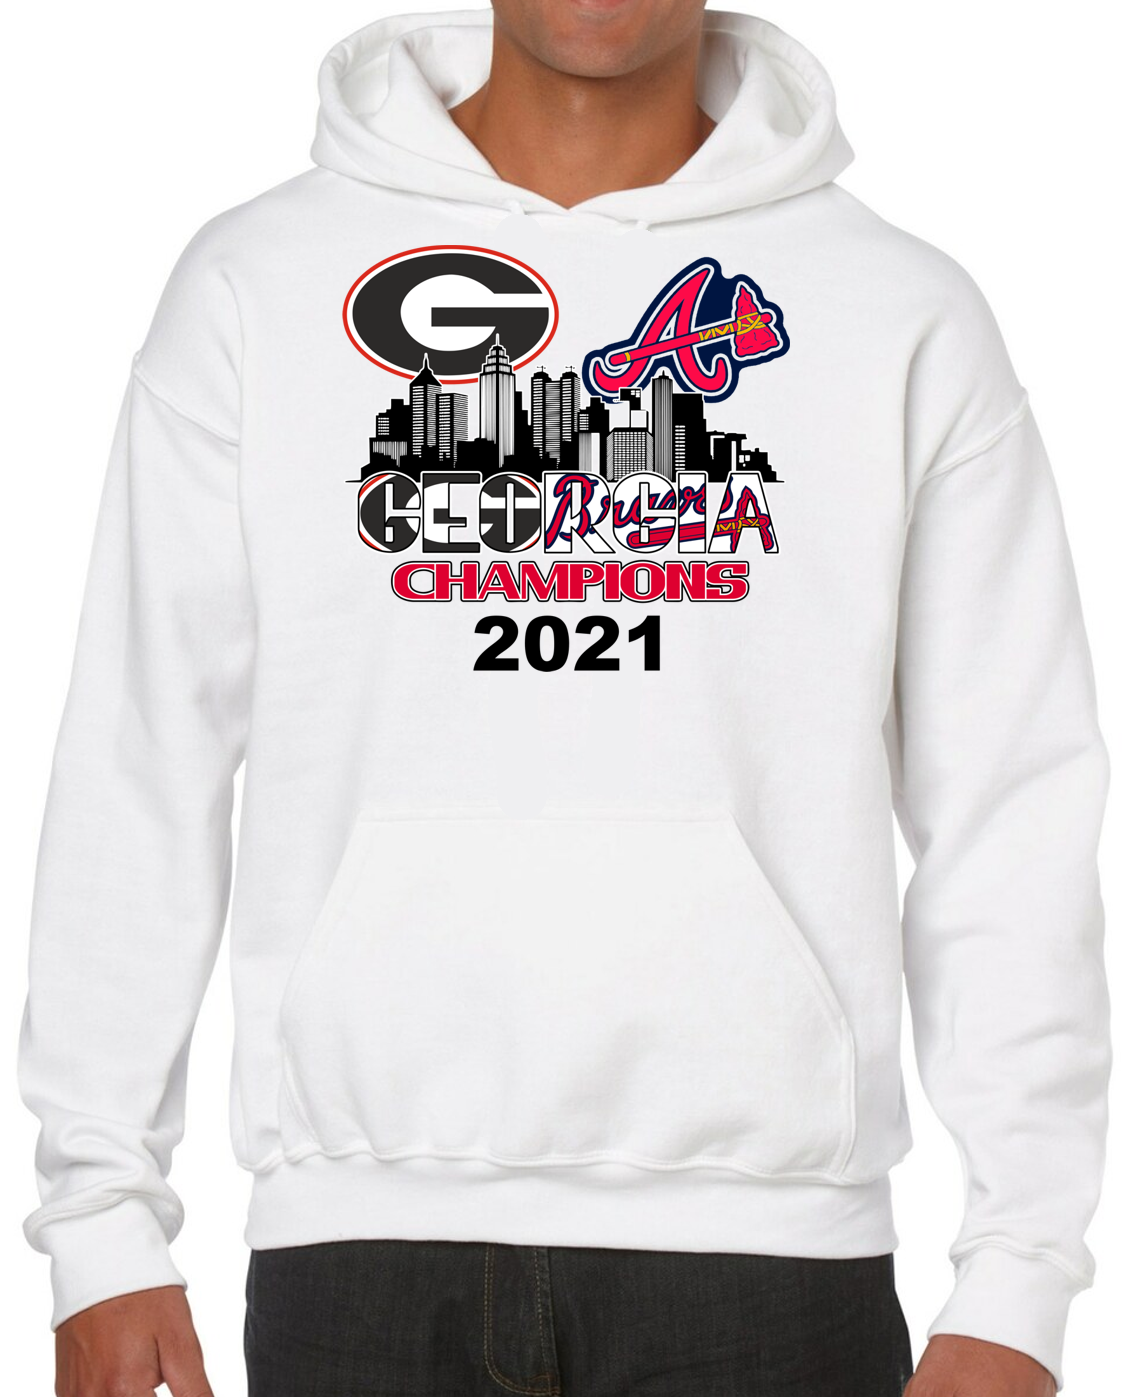 FREE shipping 2021 Champions UGA Bulldogs Braves Celebration NCAA shirt,  Unisex tee, hoodie, sweater, v-neck and tank top